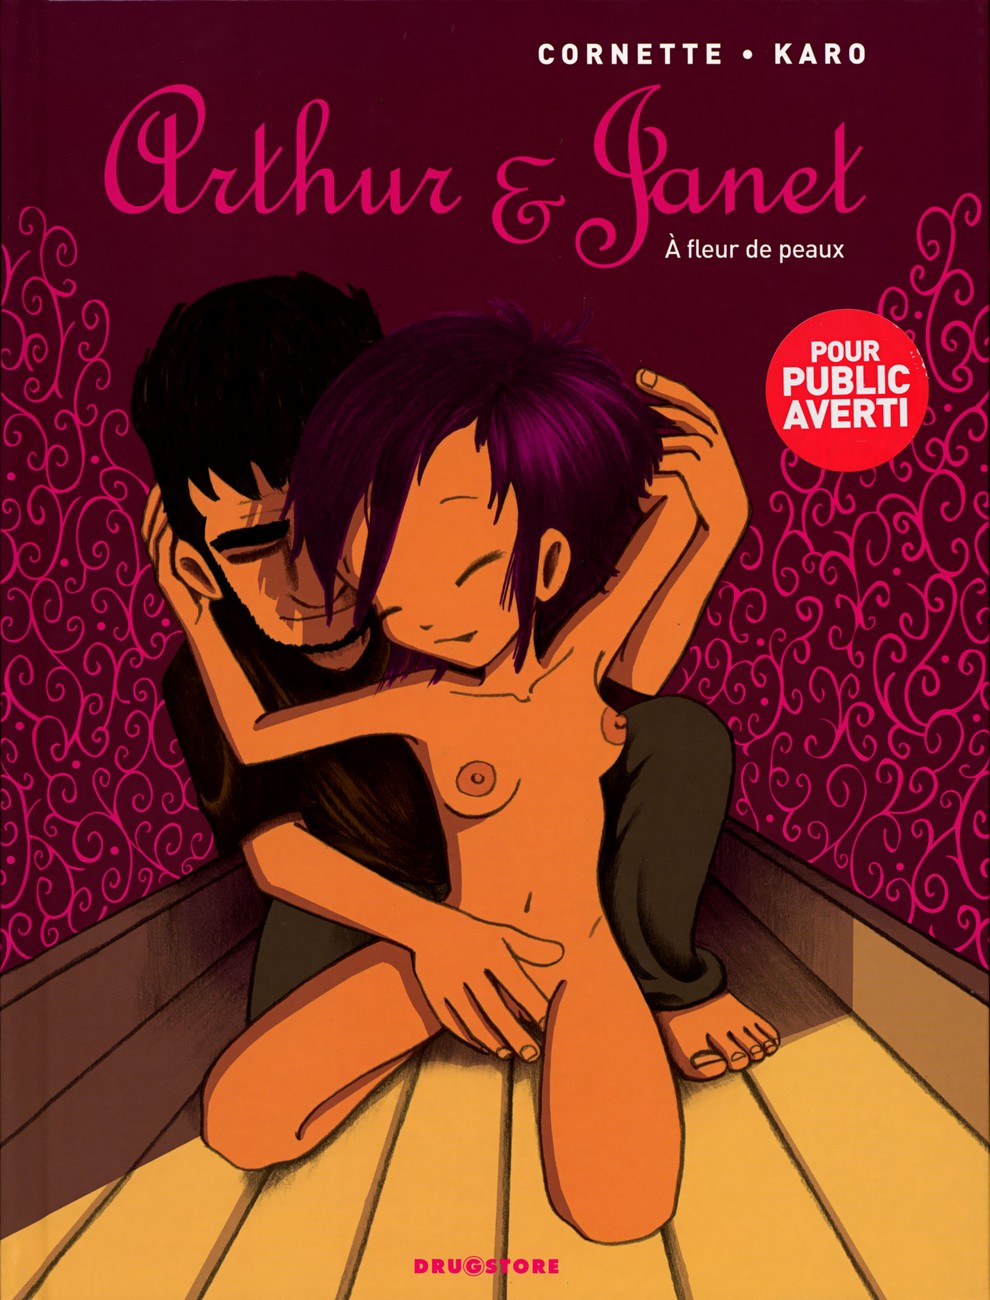 Arthur Cartoon Porn - MyHentaiGallery - Free Hentai, Porn Comics and Cartoon Sex